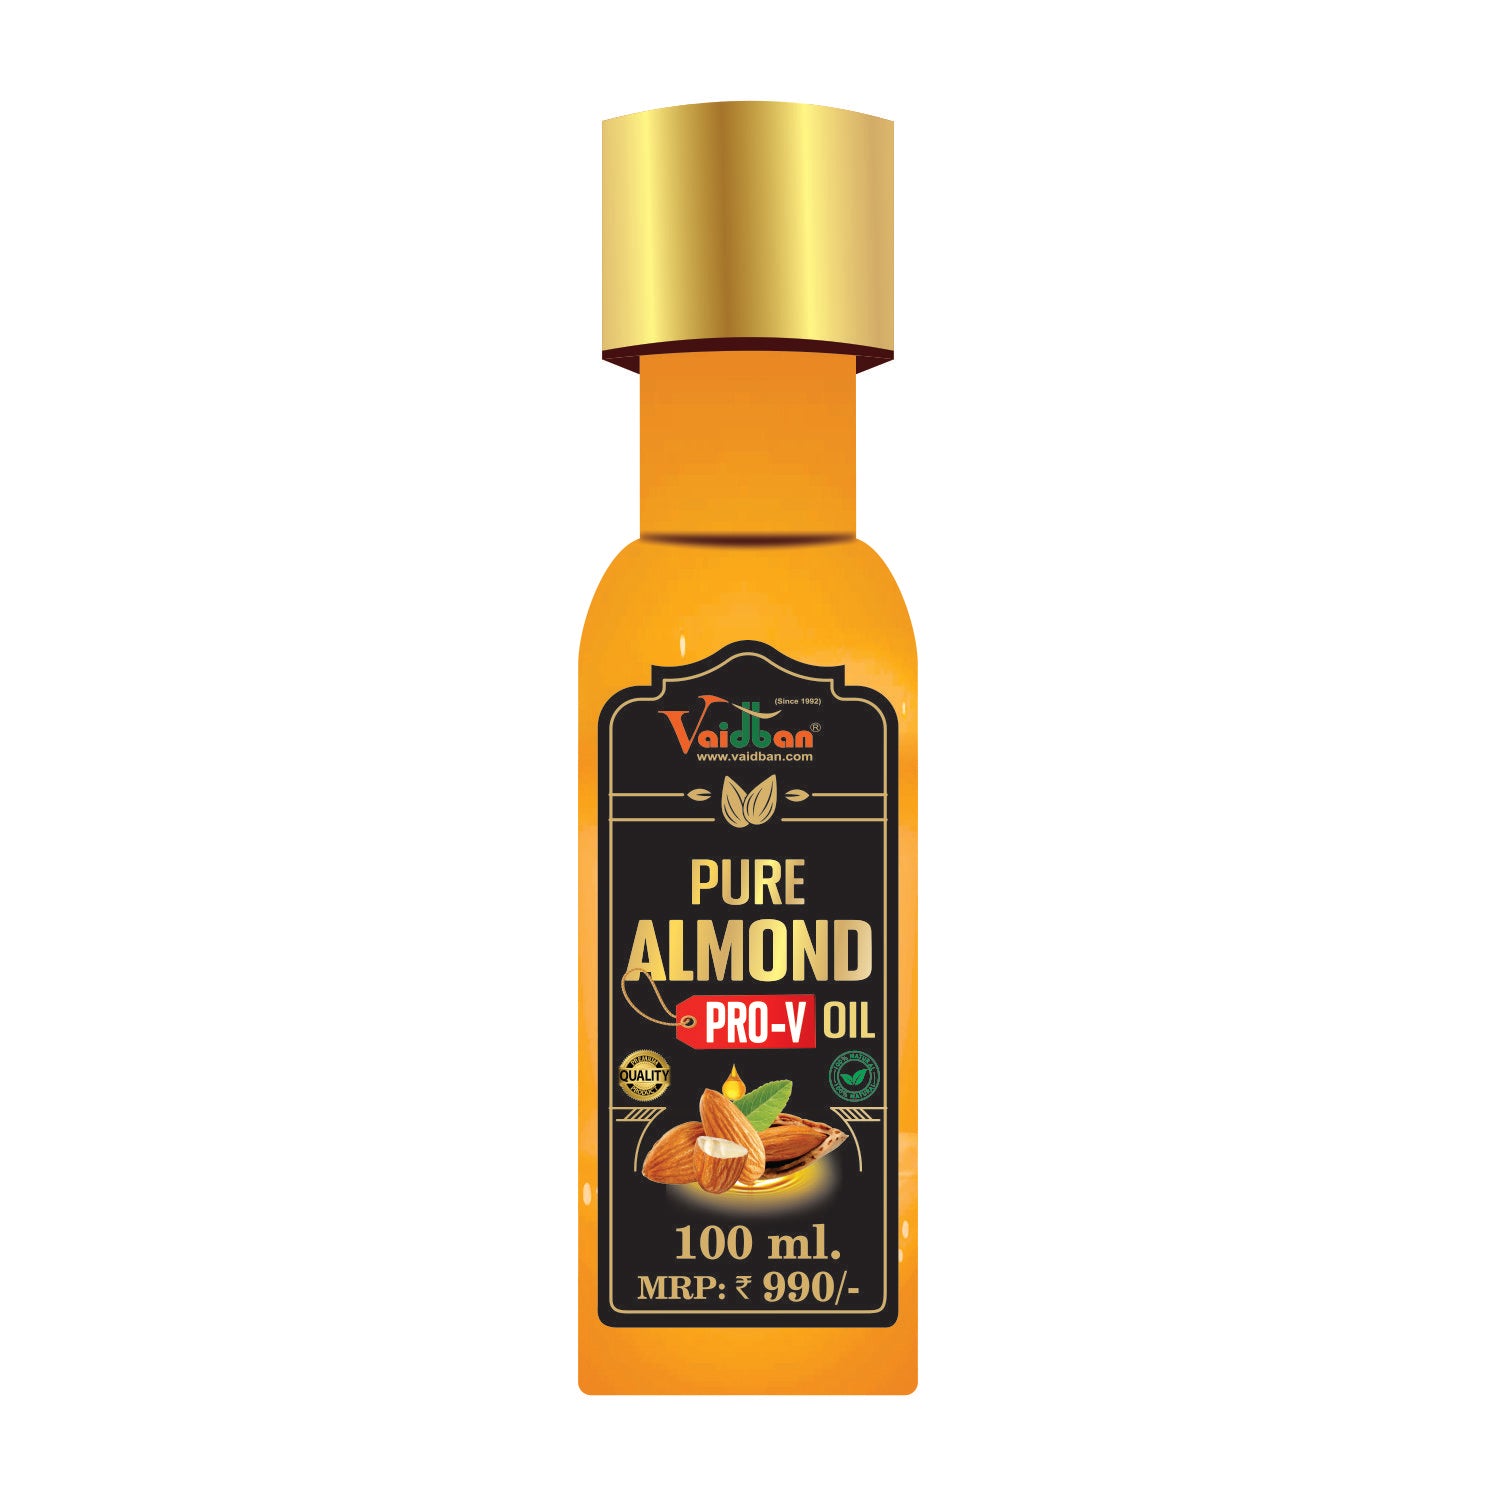 Vaidban Pure Almond Pro-V Oil (100 Ml) : Nourishment for Skin and Hair